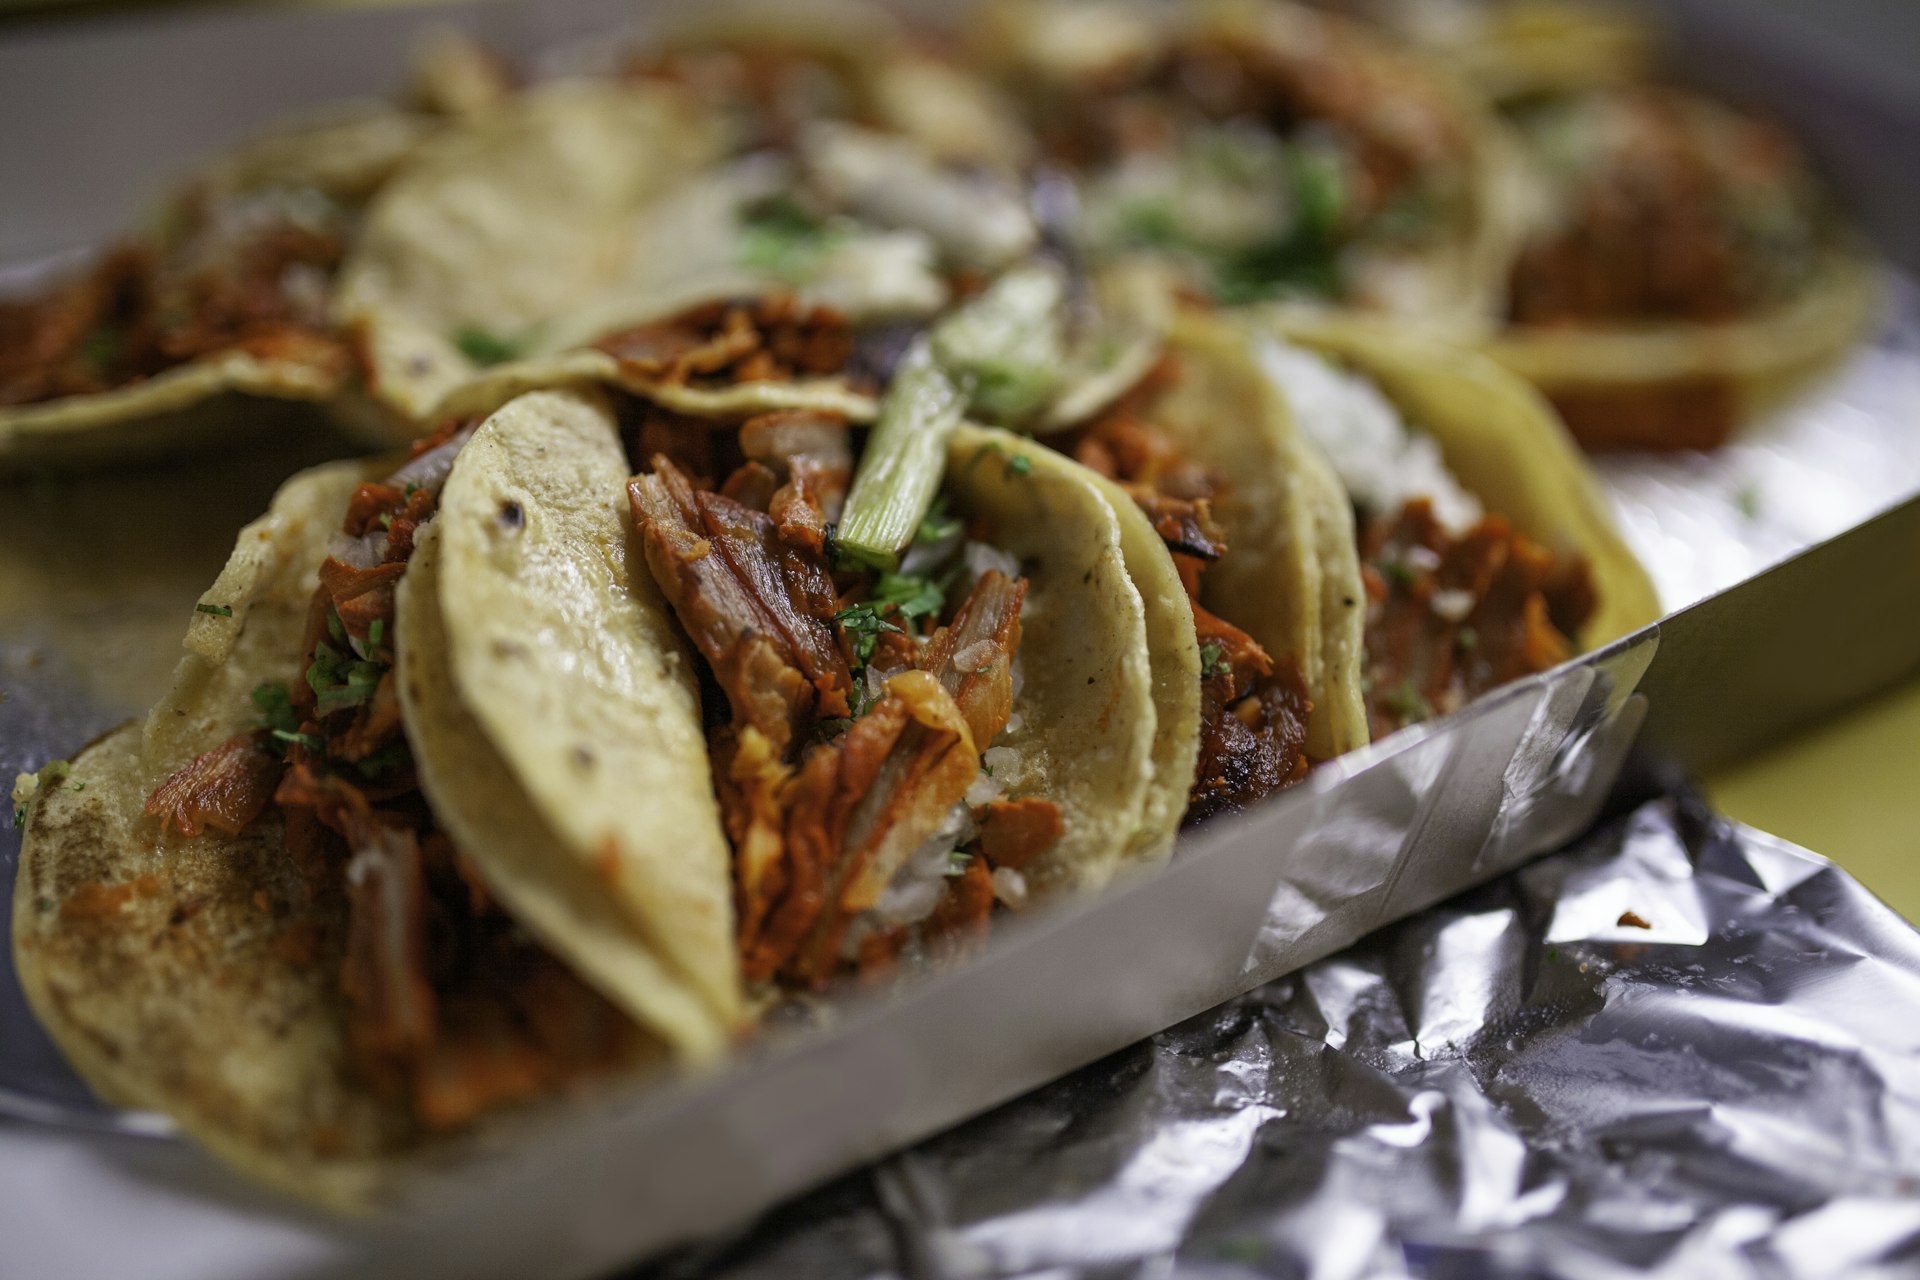 A close-up image of tacos al pastor